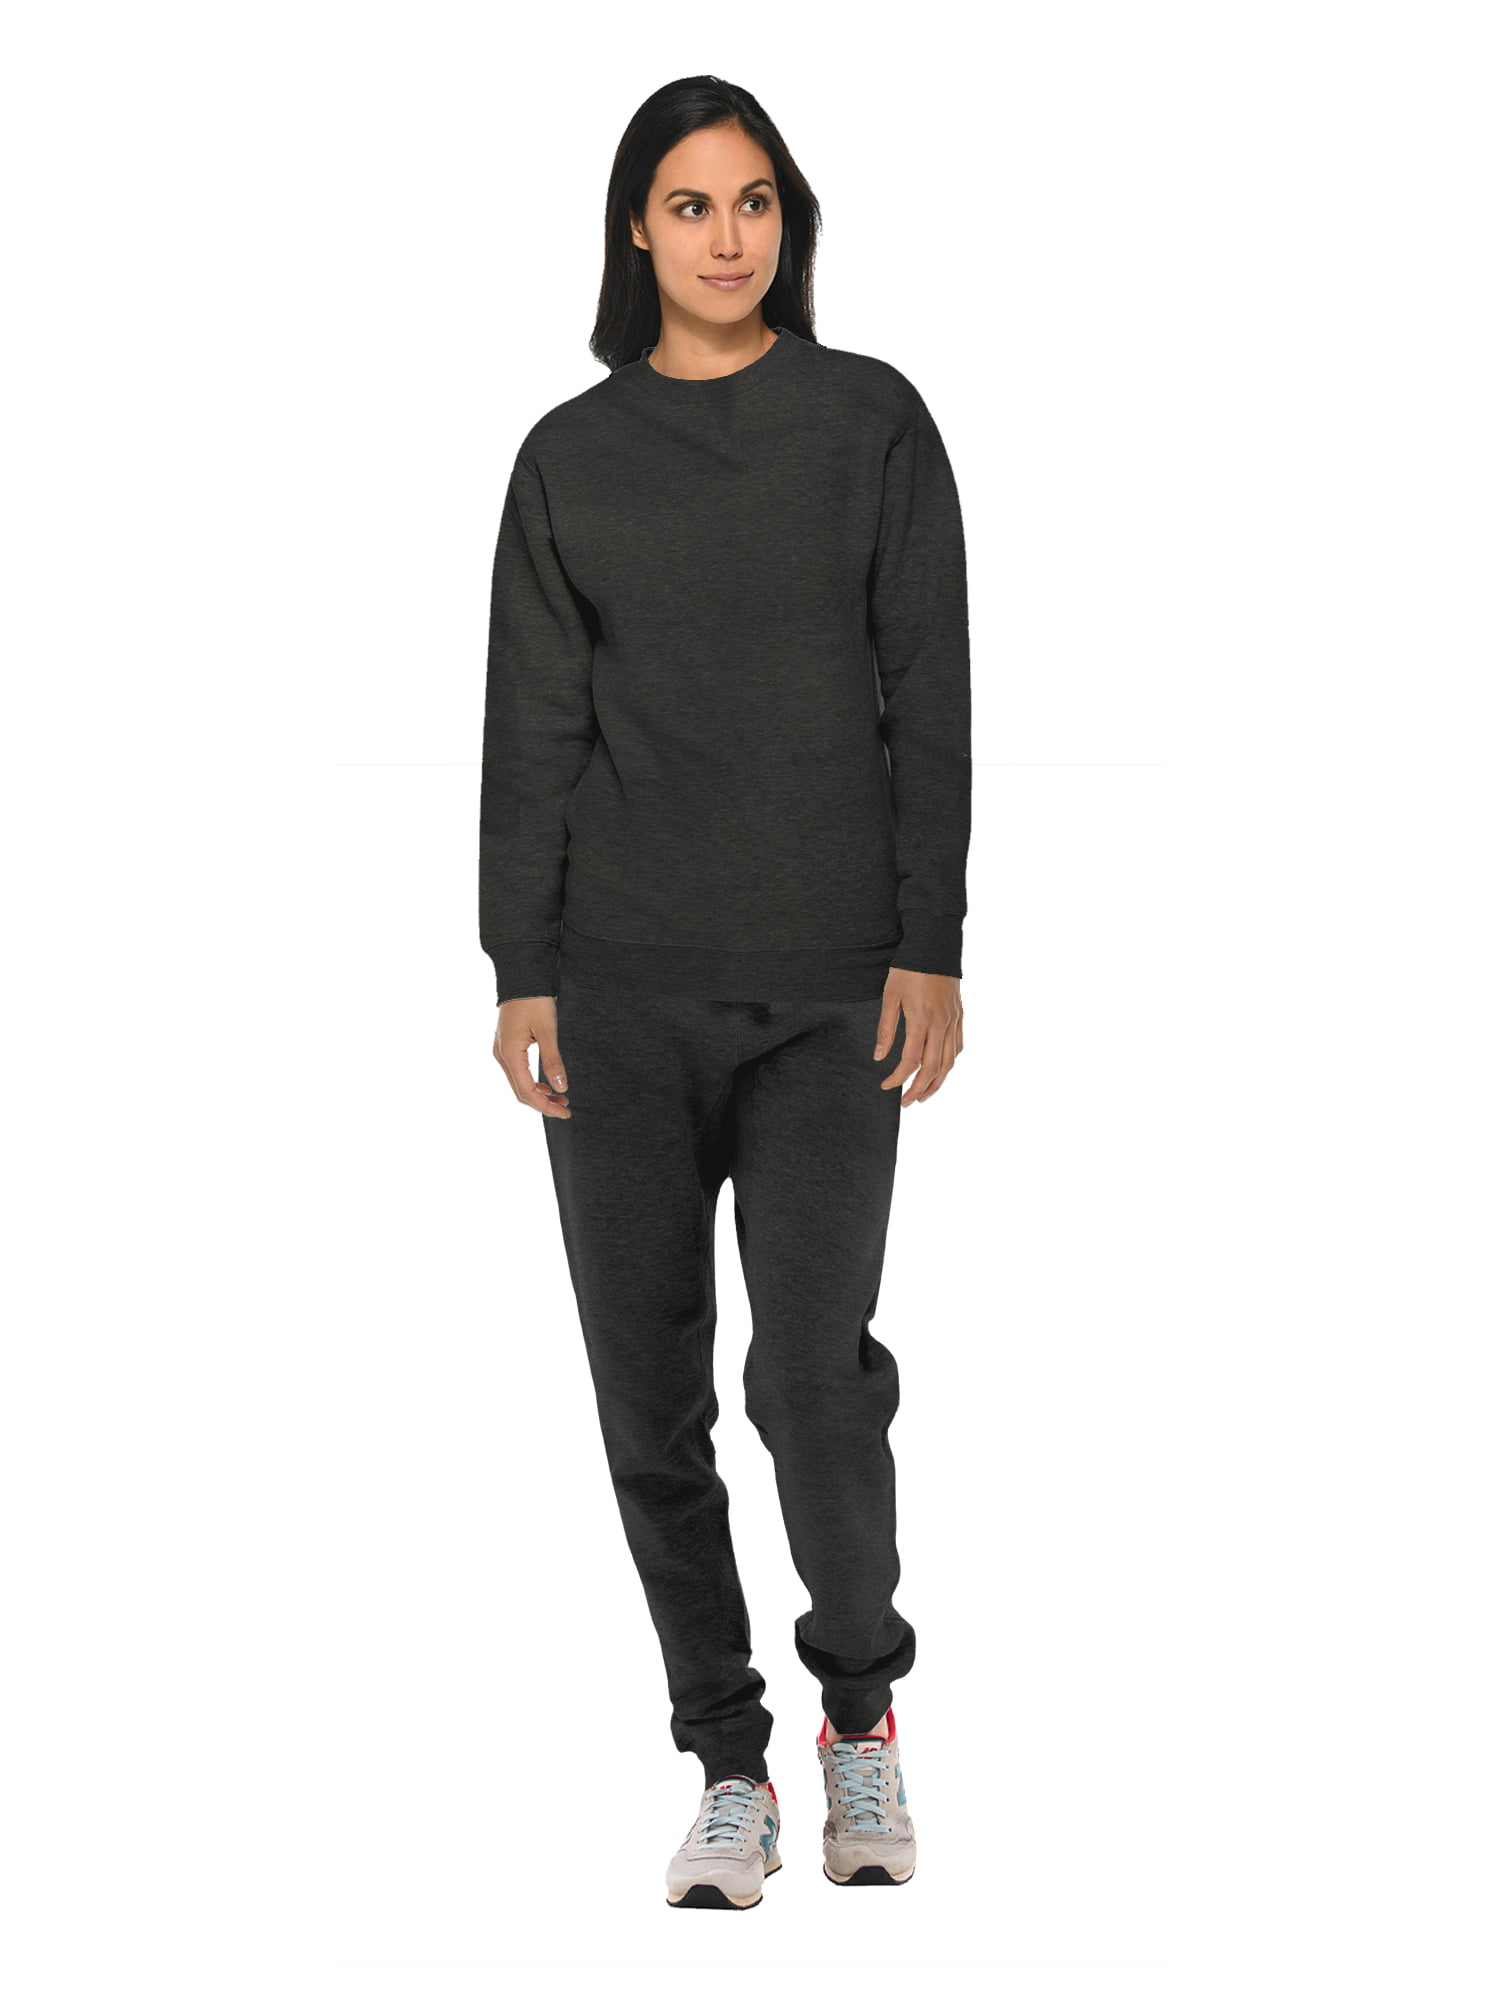 Sweatsuits 2Pcs Sets for Women Mens Tracksuit Unisex Sweatshirt and